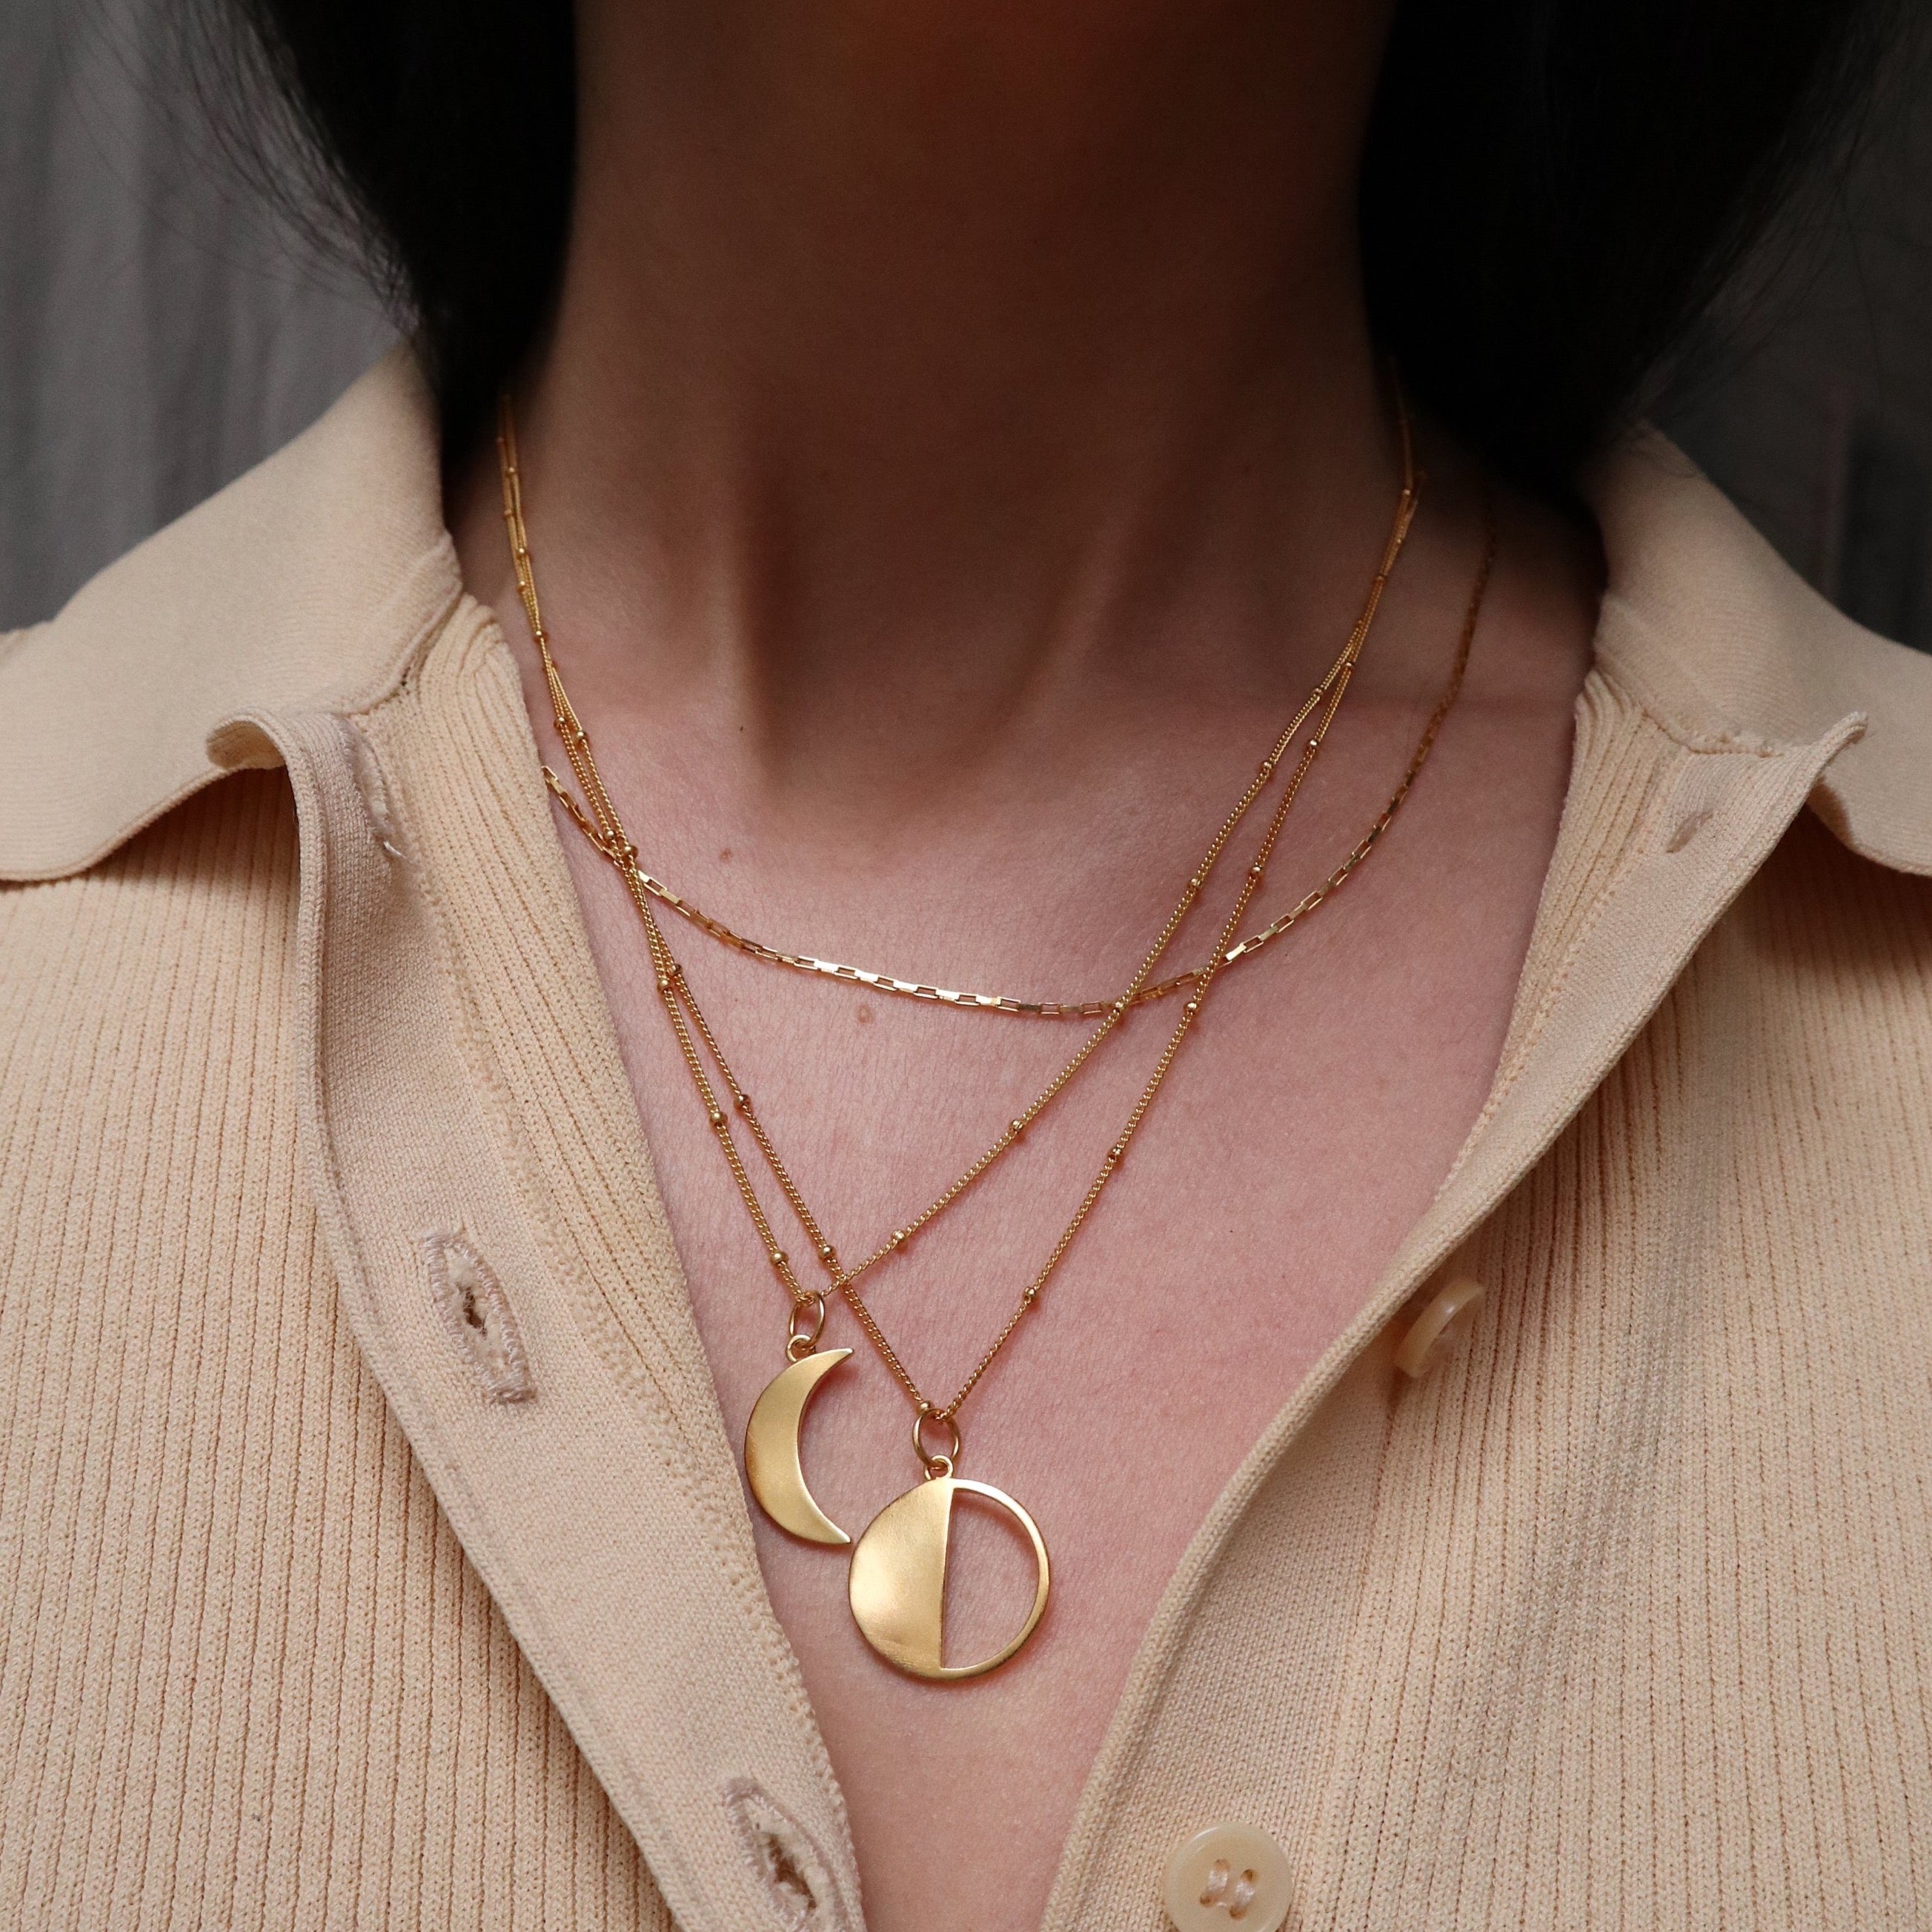 stella moon & stars silver necklace • soul sister gift • EFYTAL - EFYTAL  Jewelry